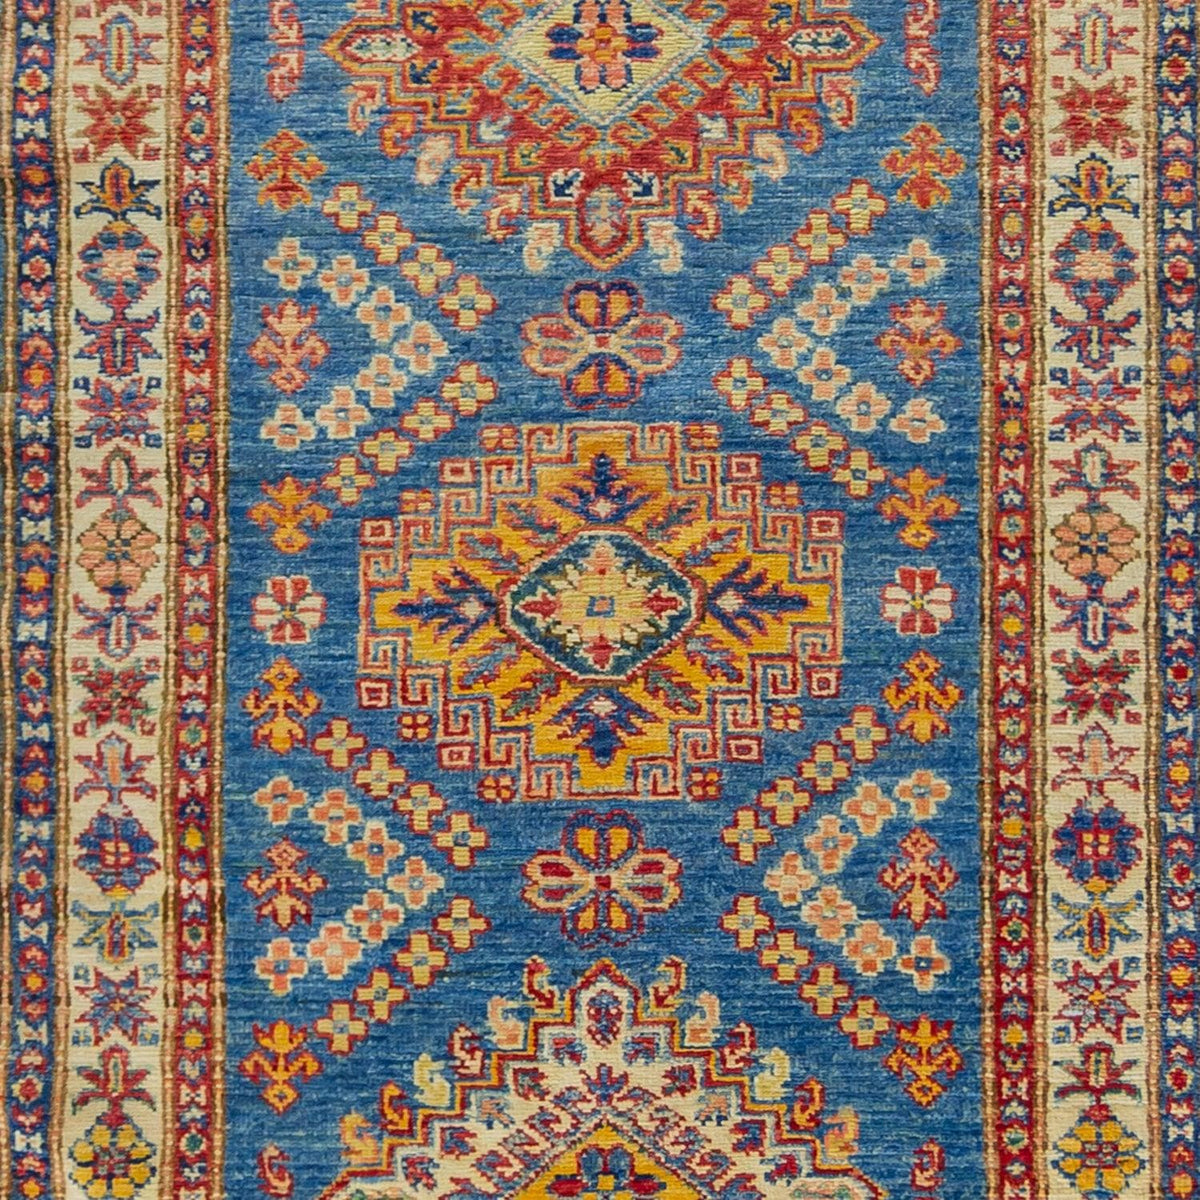 Fine Hand-knotted Traditional Wool Super Kazak Blue Runner 82cm x 298cm